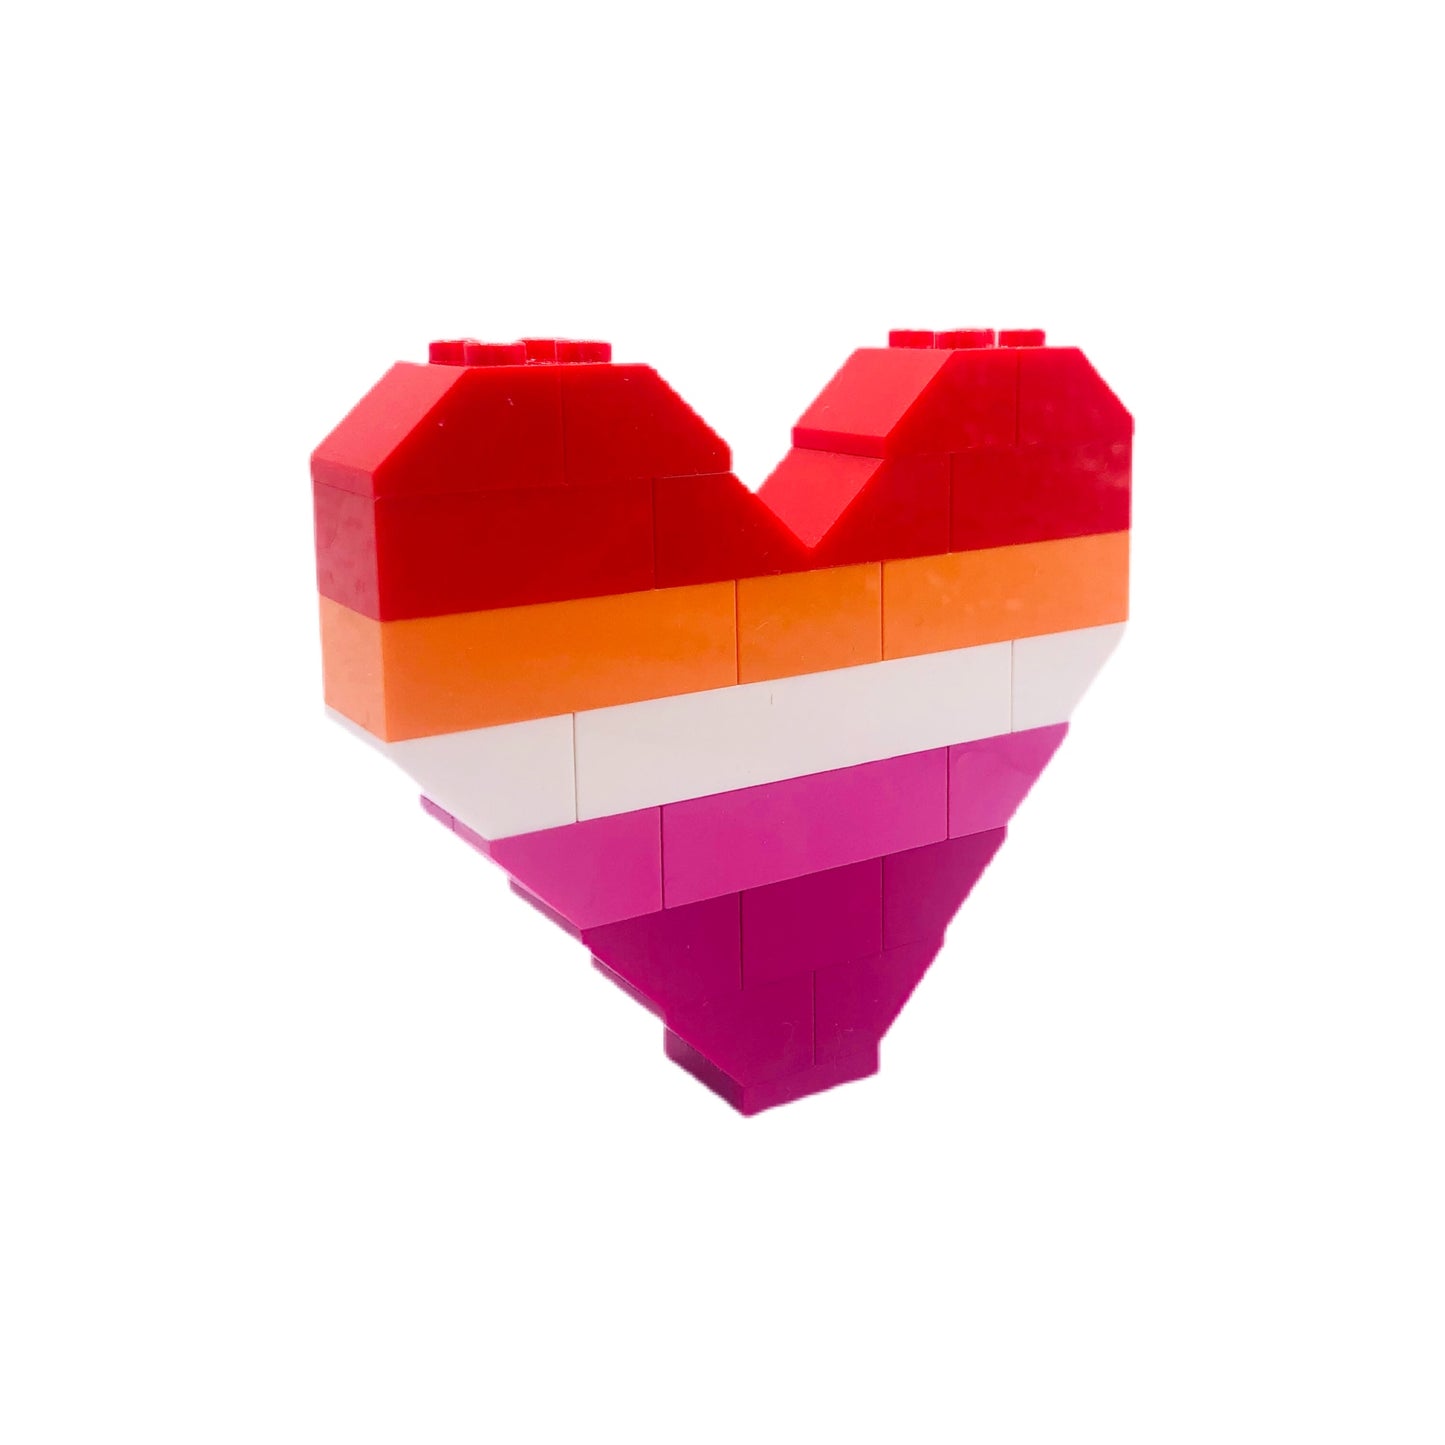 BrickNetty Pride Heart - Lesbian Pride Flag